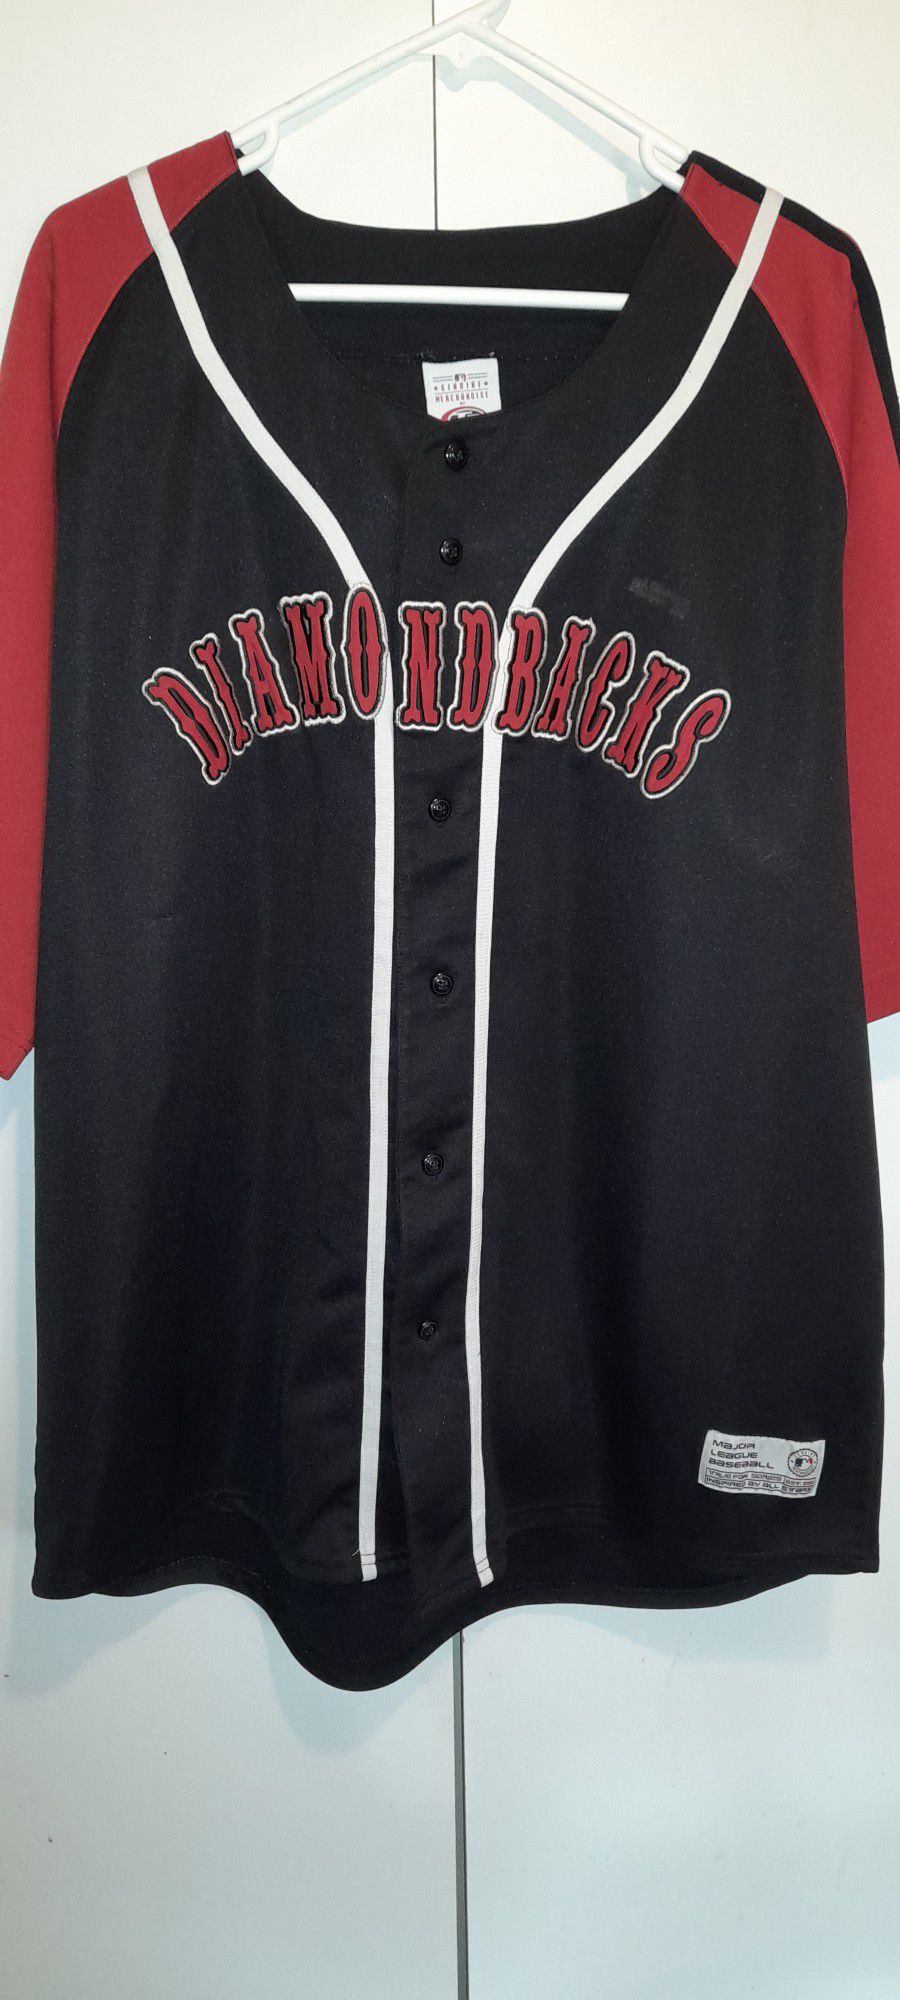 Diamondbacks Baseball Jerseys